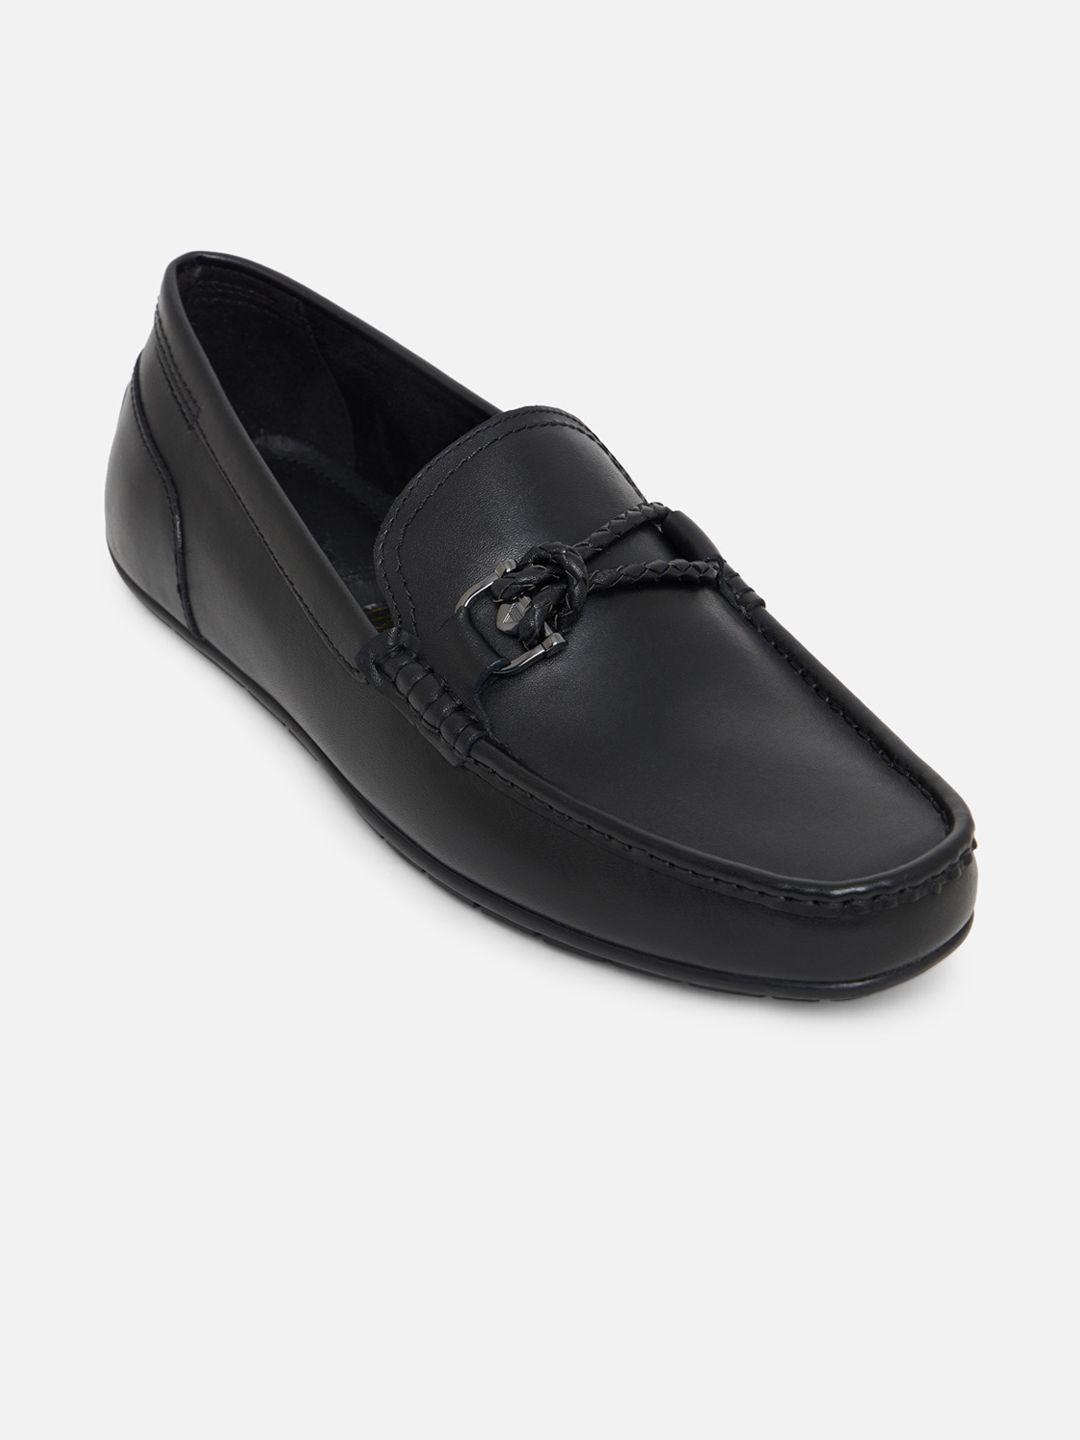 aldo-men-black-leather-loafers